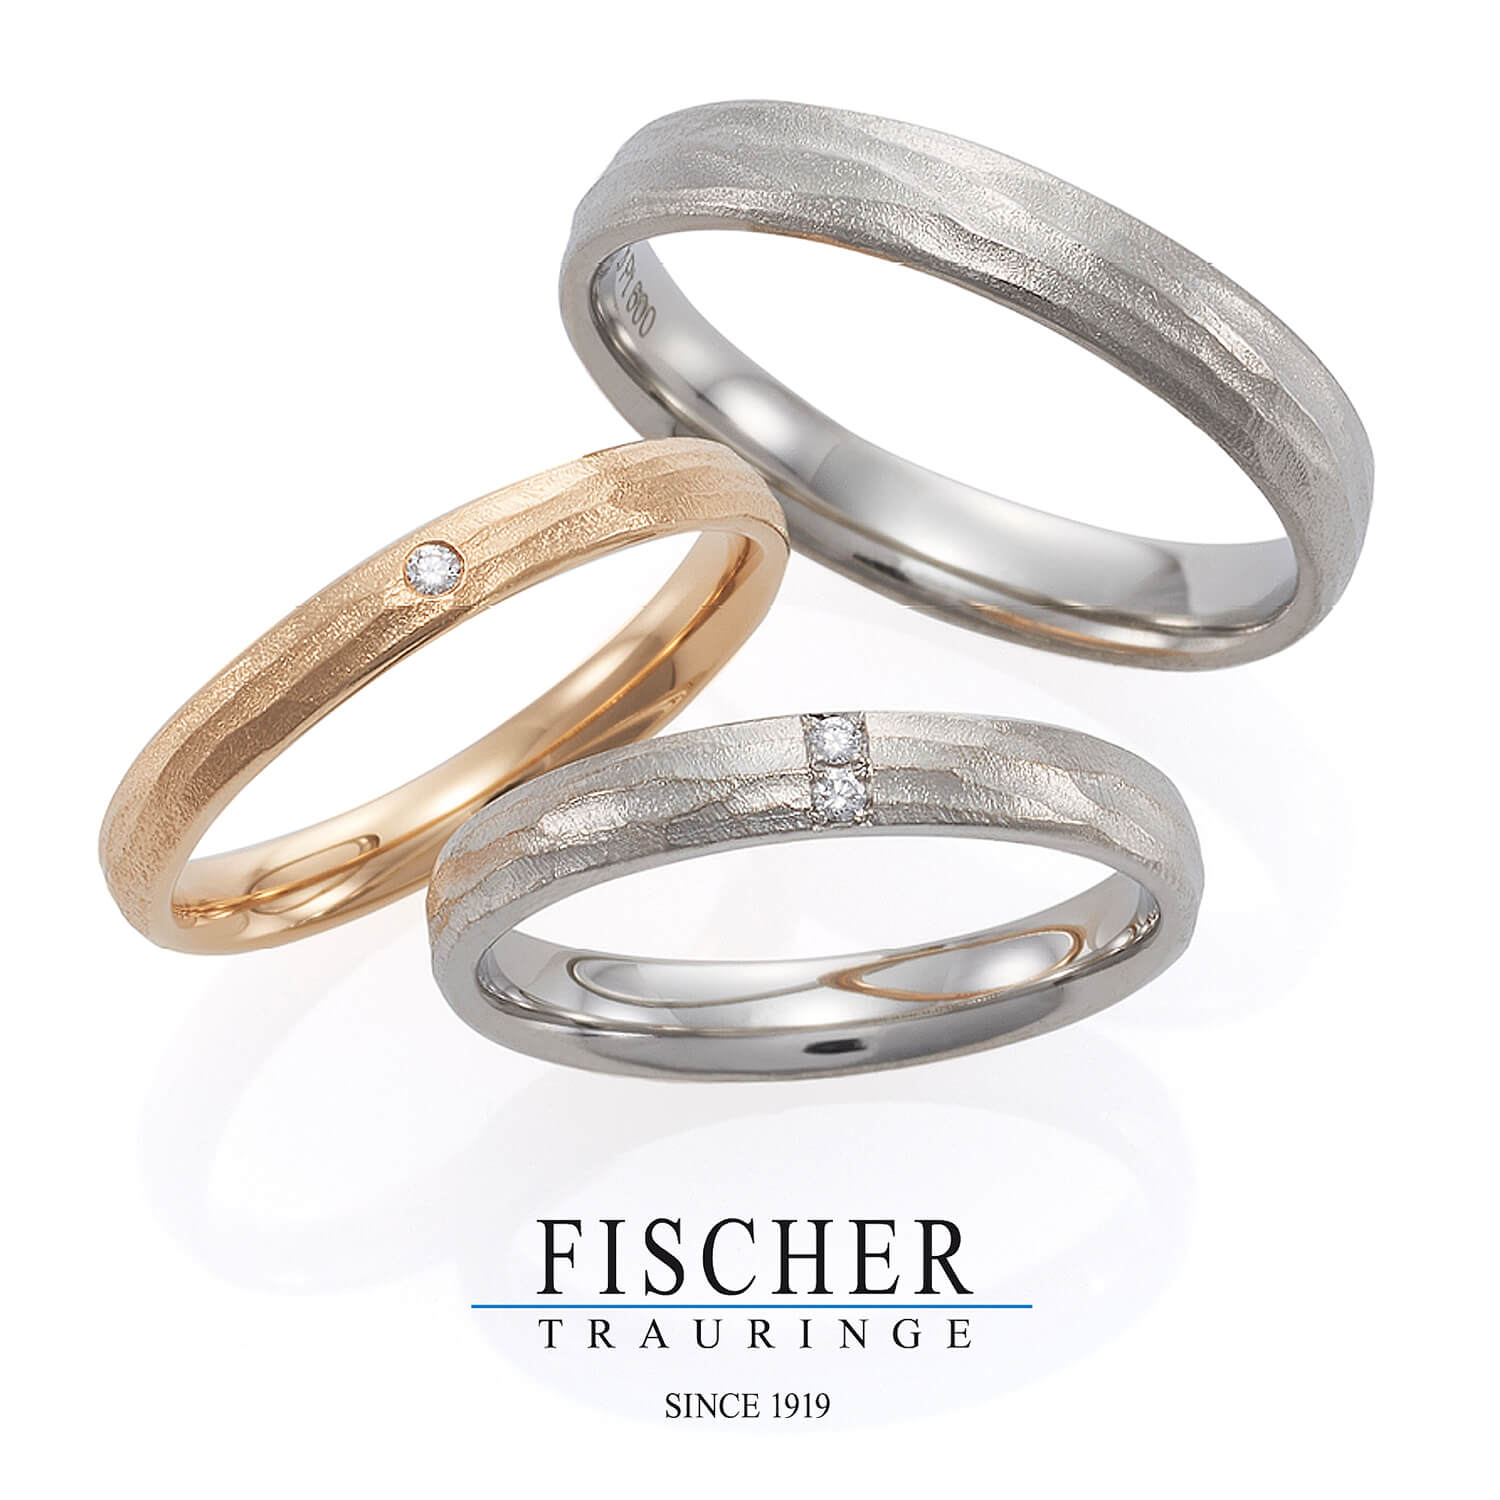 FISCHERフィッシャーの結婚指輪マリッジリングMarriageringの9750449-025と9650449-035